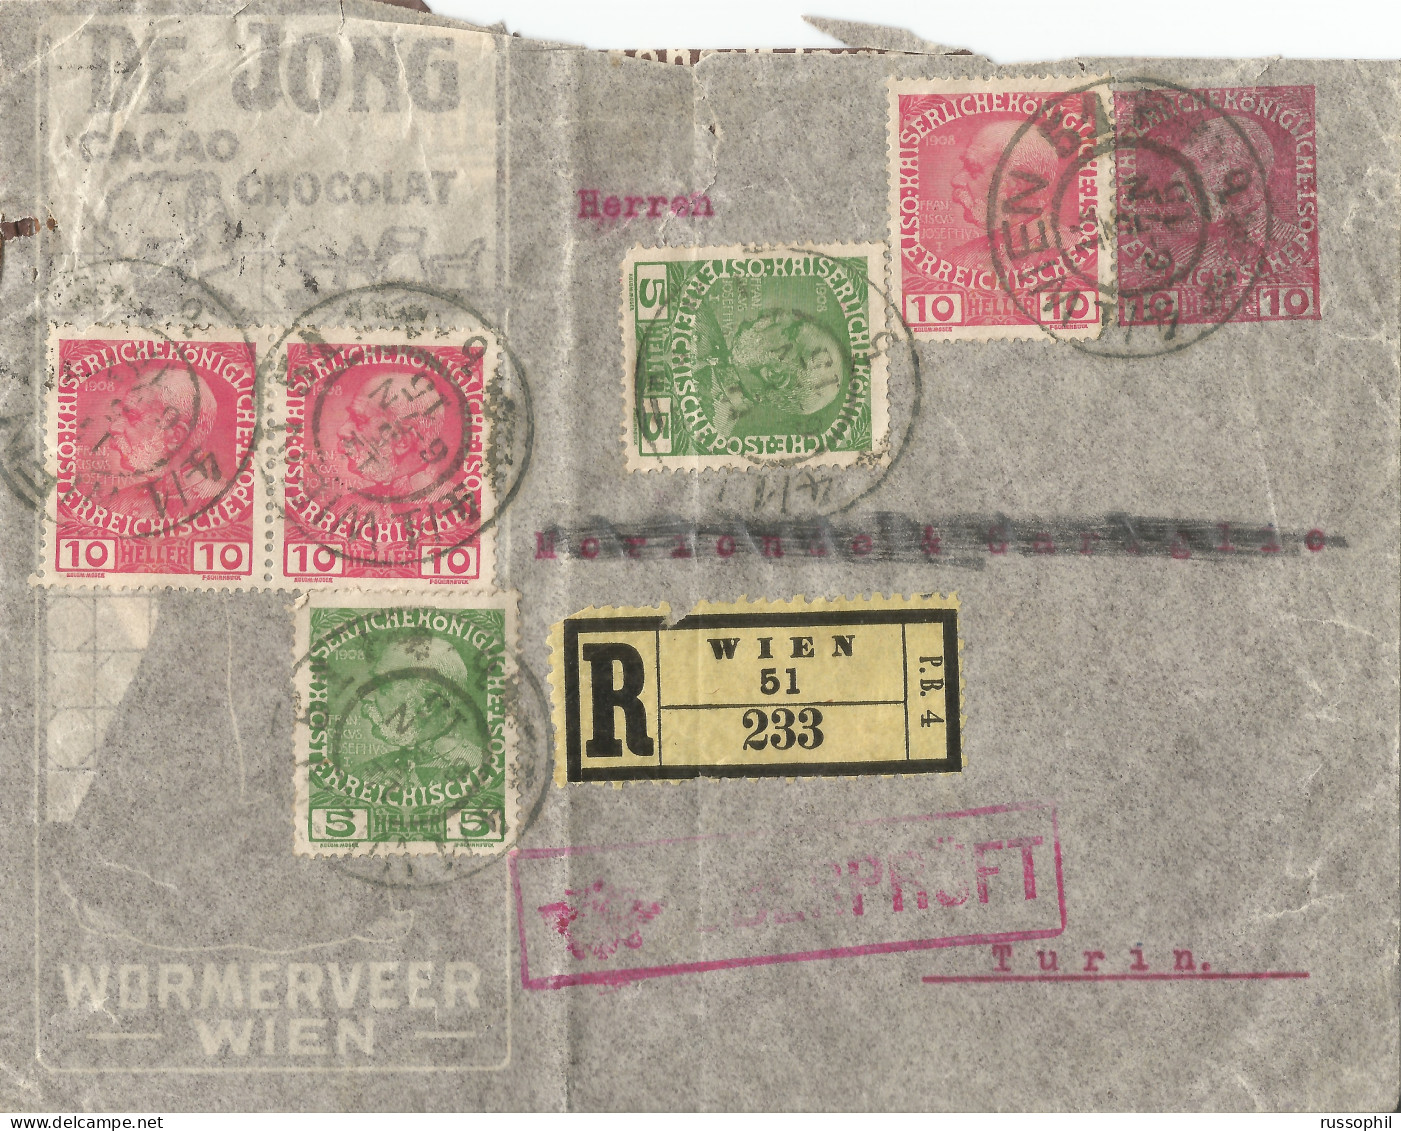 AUSTRIA - REGISTERED 40 HELLER UPRATED DE JONG CACAO UND CHOKOLAKOLADEFRABRIK 10 HELLER STATIONERY COVER TO ITALY - 1916 - Storia Postale